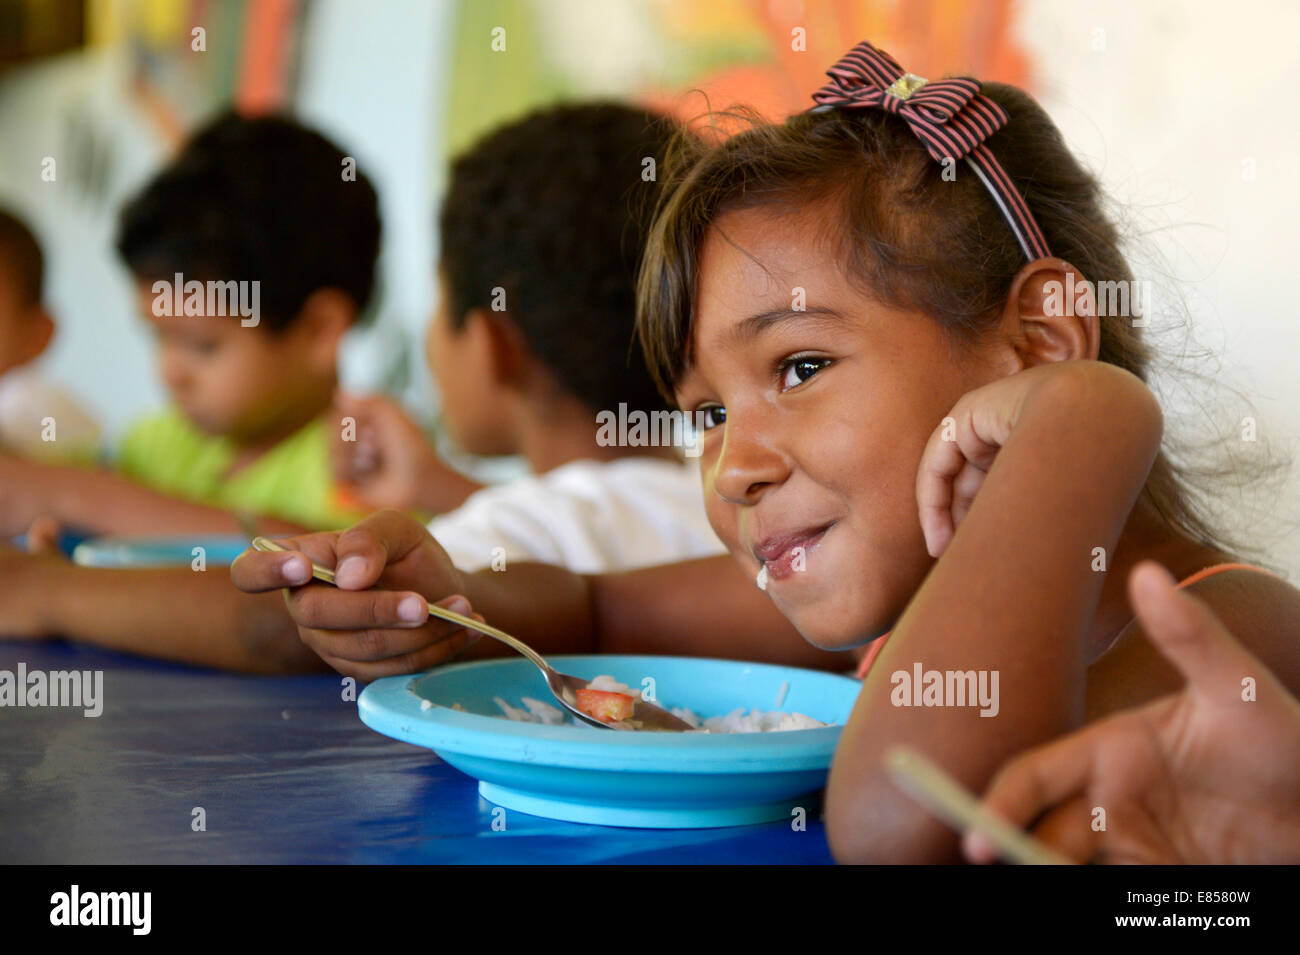 https://c8.alamy.com/comp/E8580W/girl-eating-in-the-canteen-of-a-social-project-ponta-da-serra-crato-E8580W.jpg